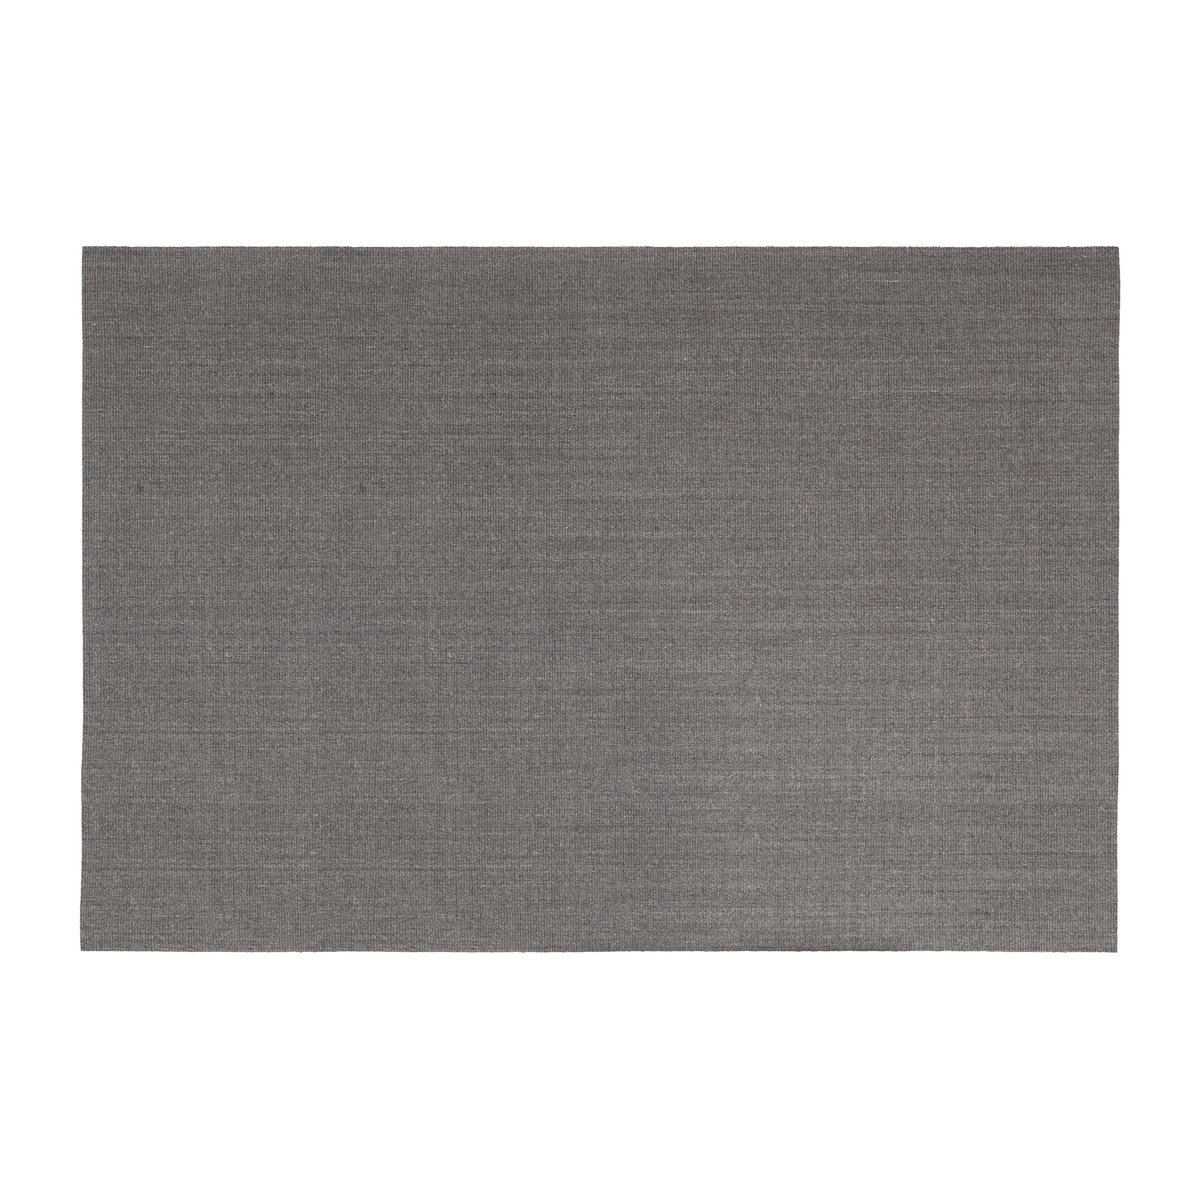 Dixie Sisal vloerkleed grijs 190x290 cm